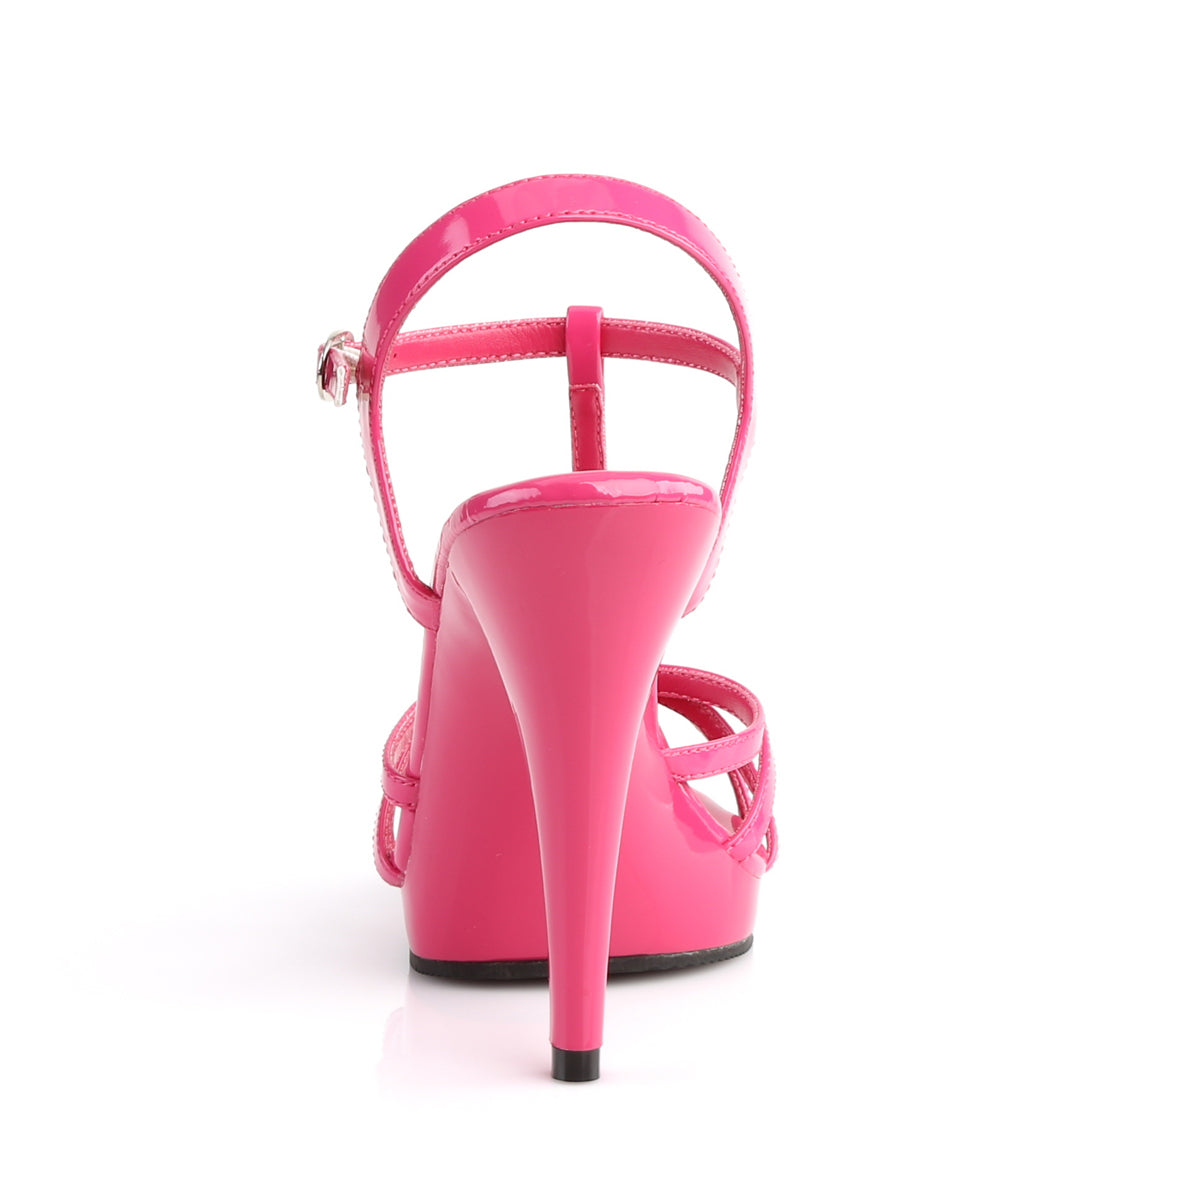 Fabulicious Sandalias para mujer FLAIR-420 PAT rosa caliente / rosa caliente